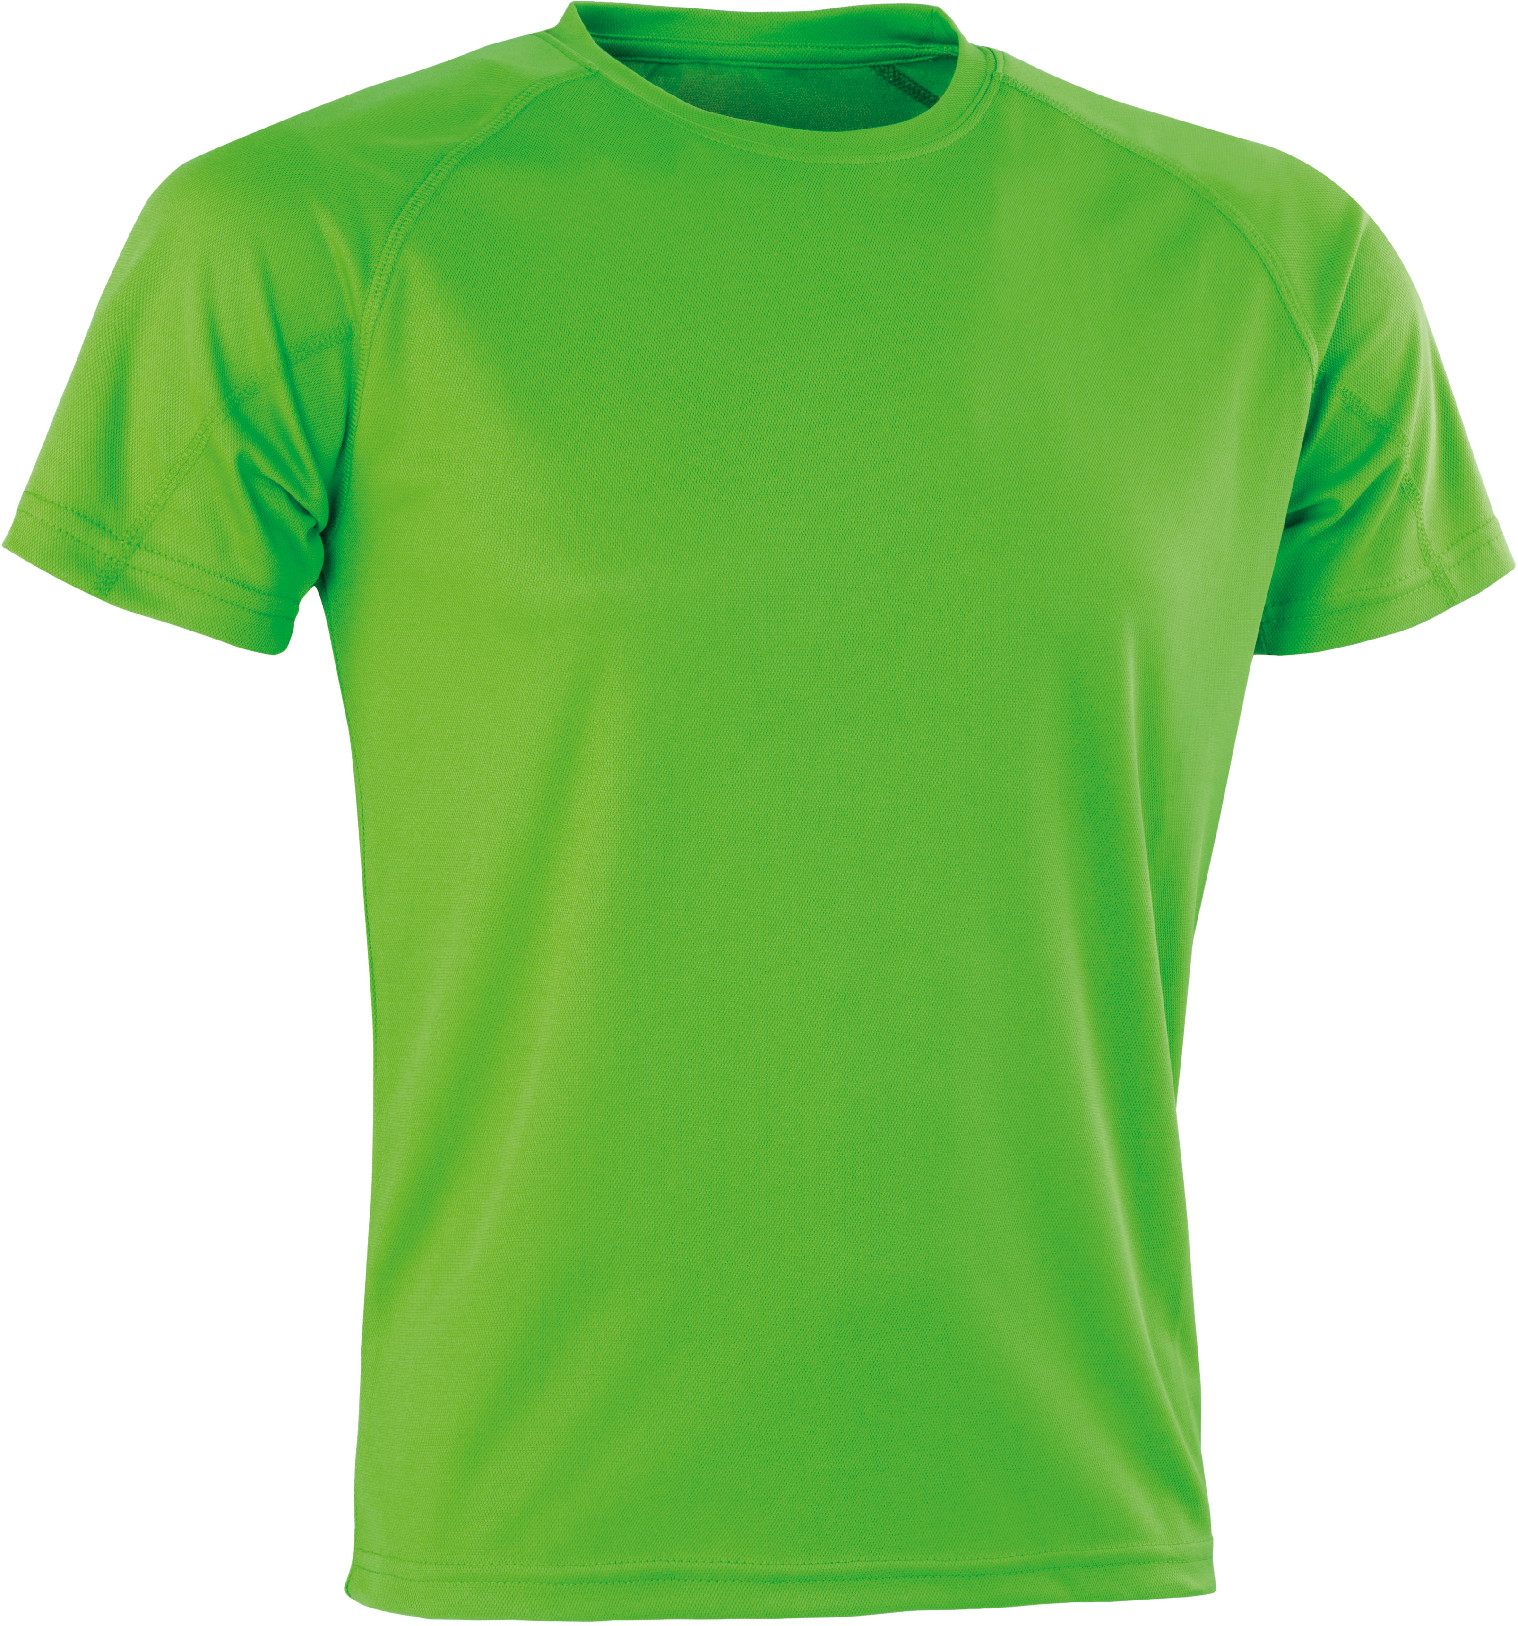 Sportovní tričko Aircool S287X Barva: limetková, Velikost: L